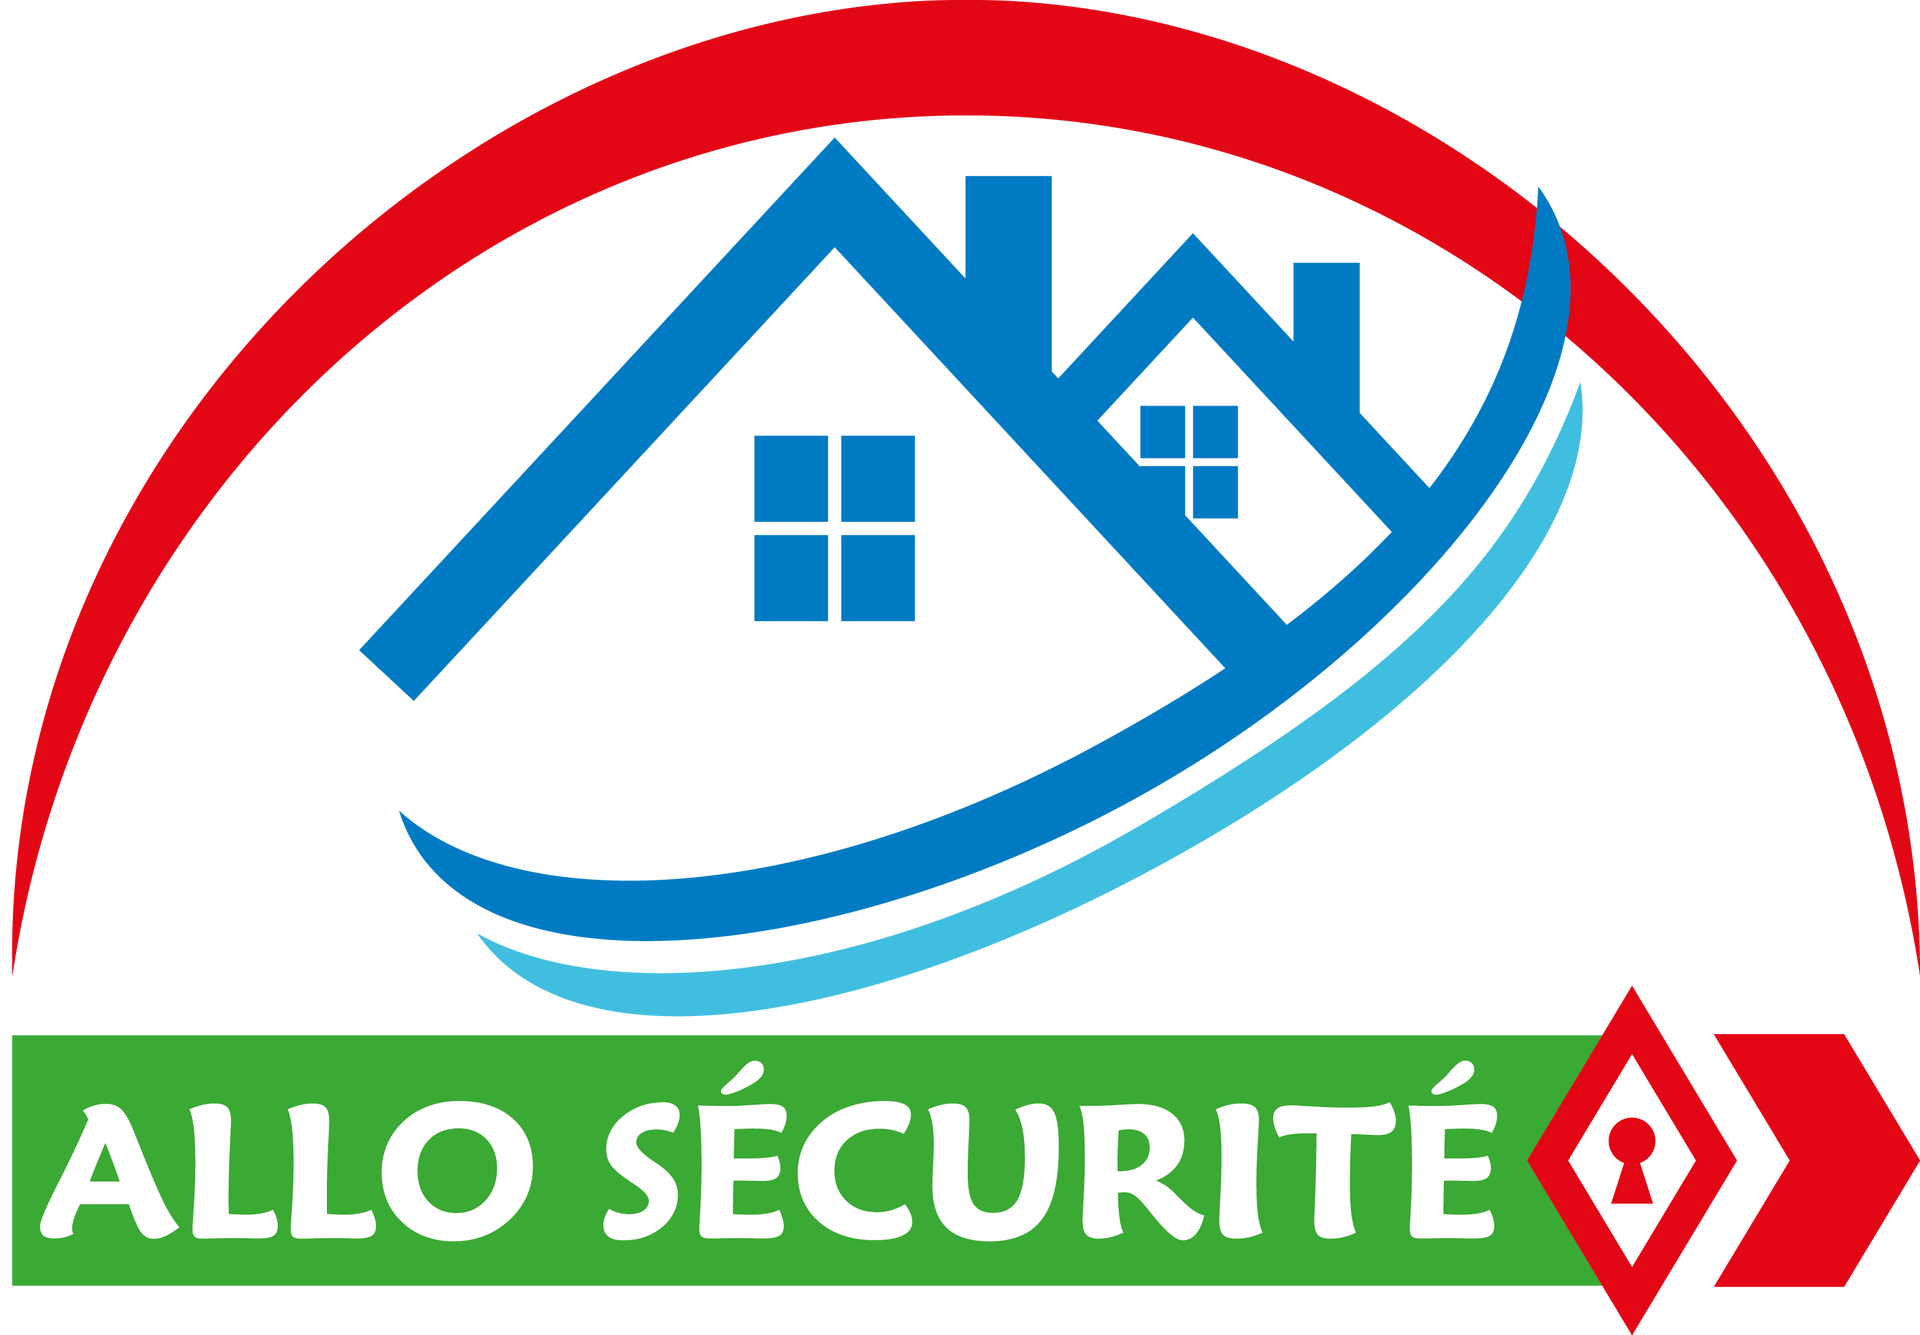 Logo Allo Sécurité